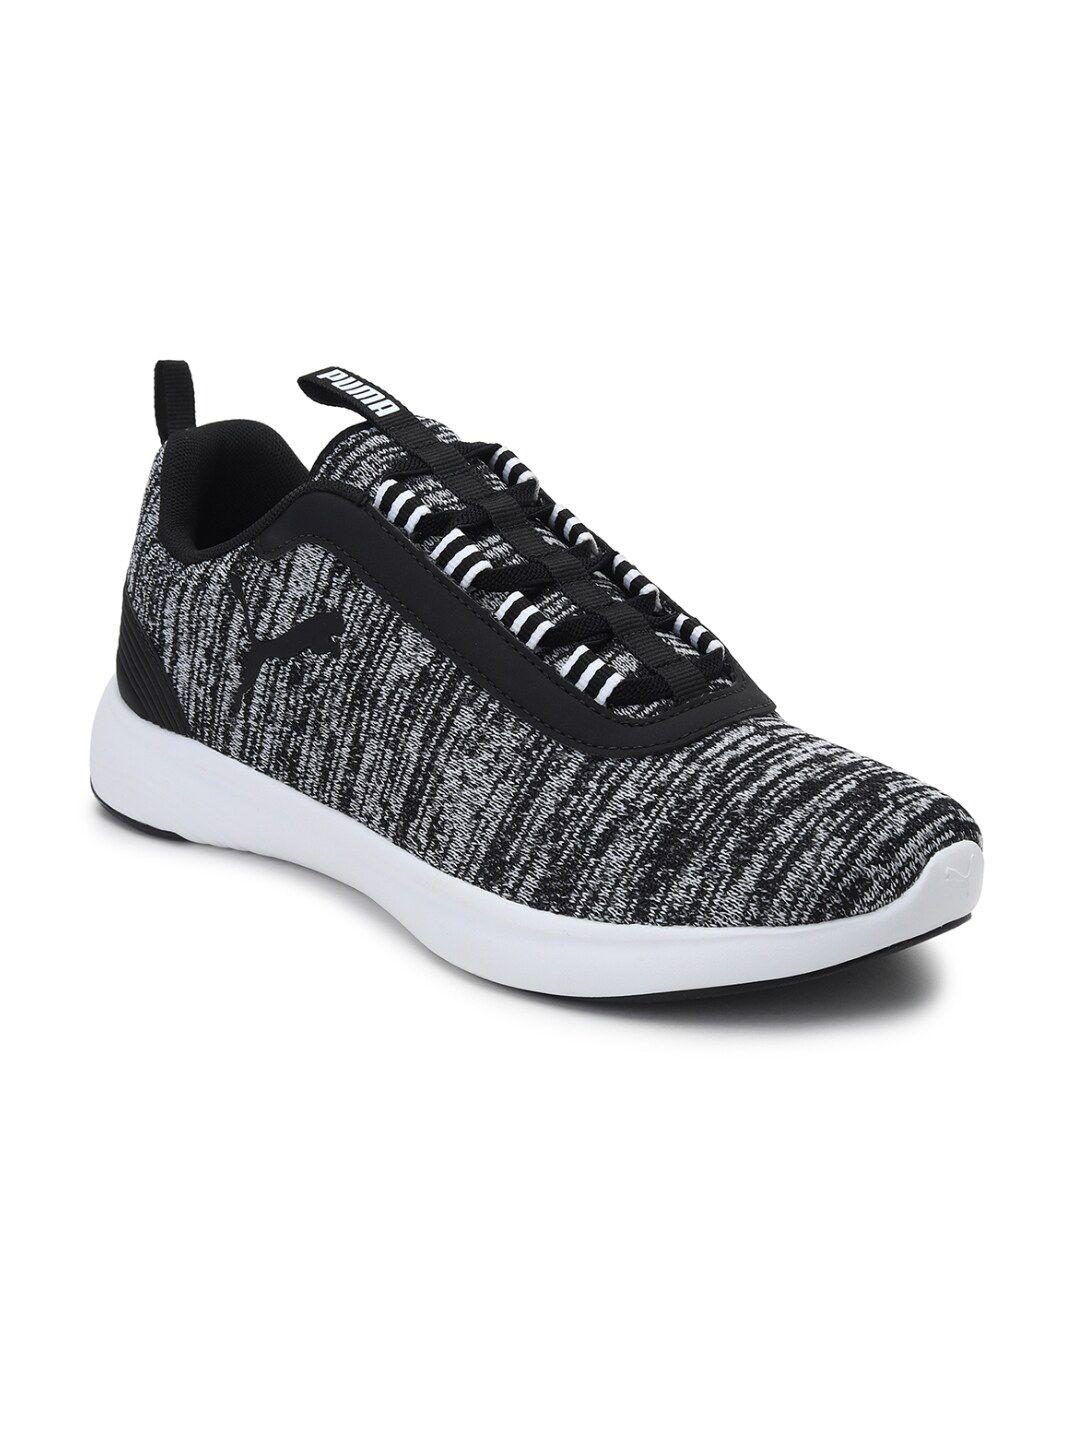 puma-unisex-black-textile-softride-vital-walking-shoes